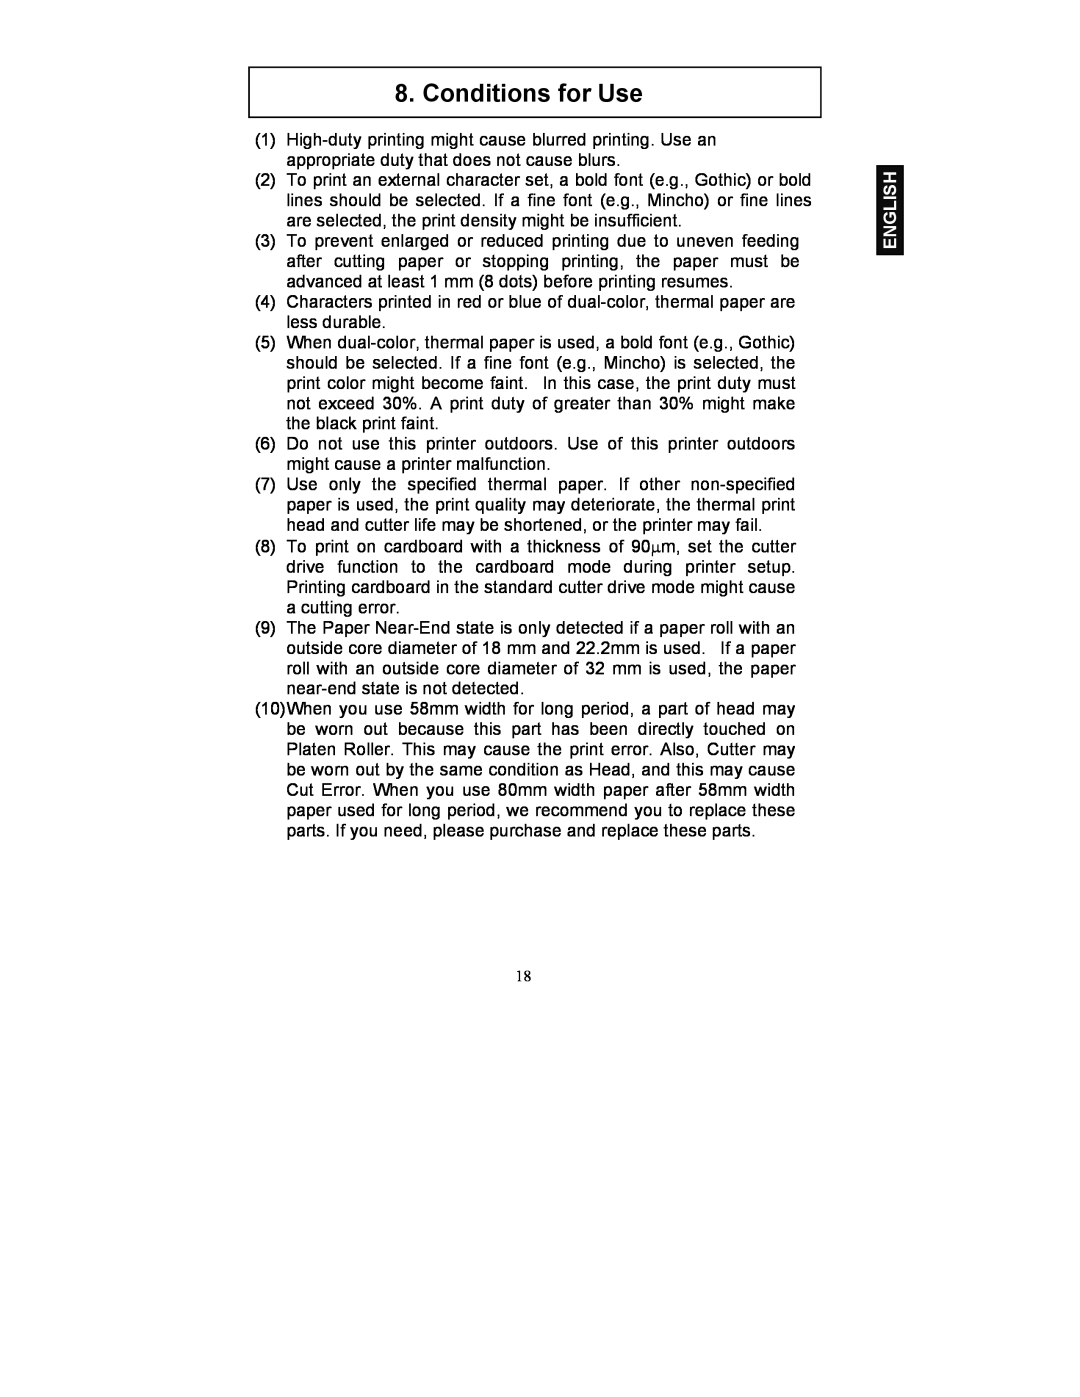 Fujitsu FP-410 user manual Conditions for Use, English 